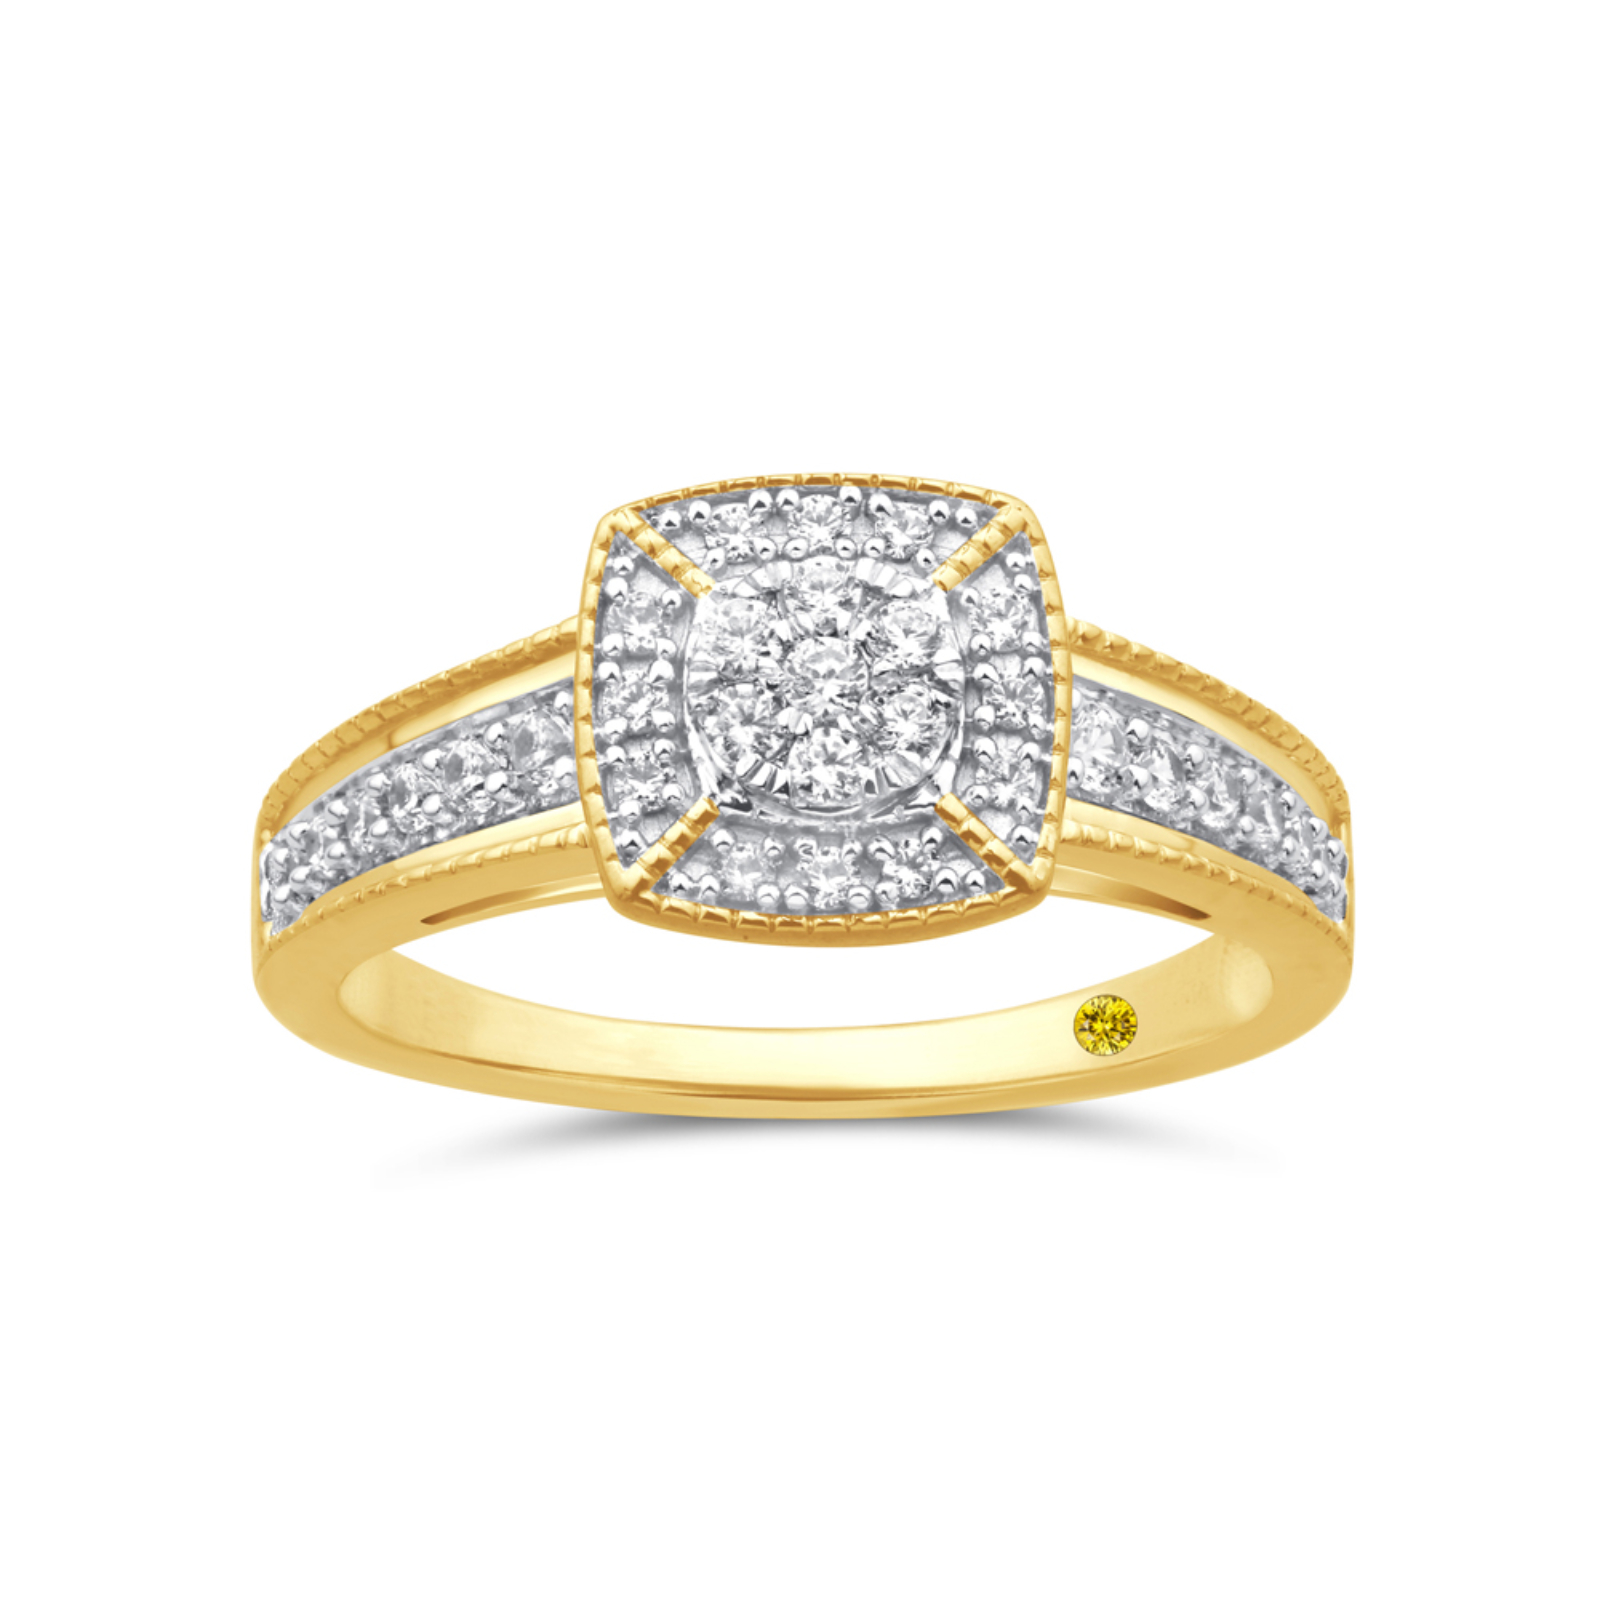 Vintage Inspired Lab Created Halo Diamond Engagement Ring | Bice